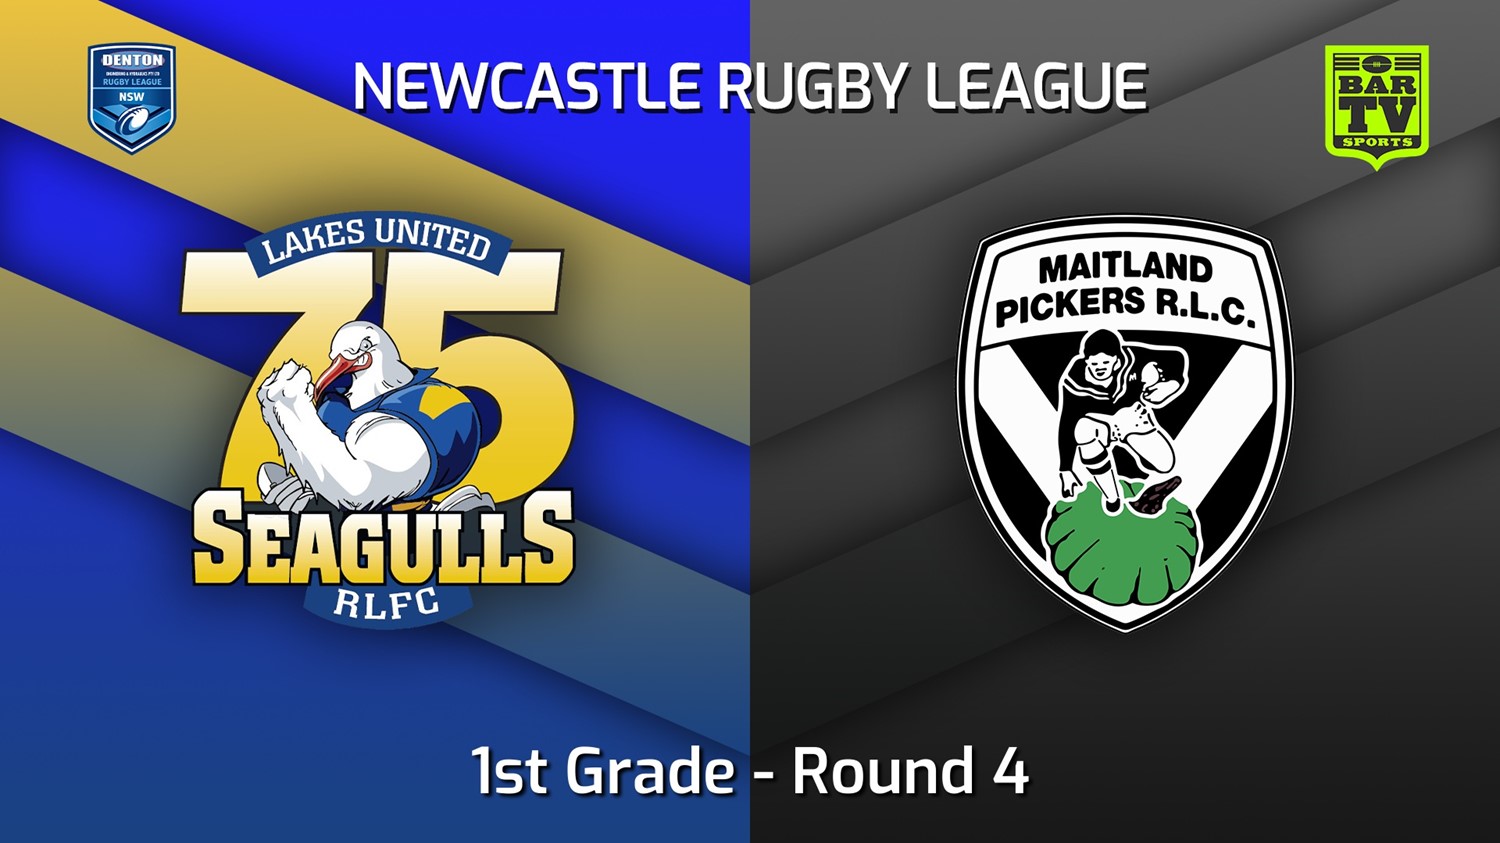 220416-Newcastle Round 4 - 1st Grade - Lakes United v Maitland Pickers Slate Image